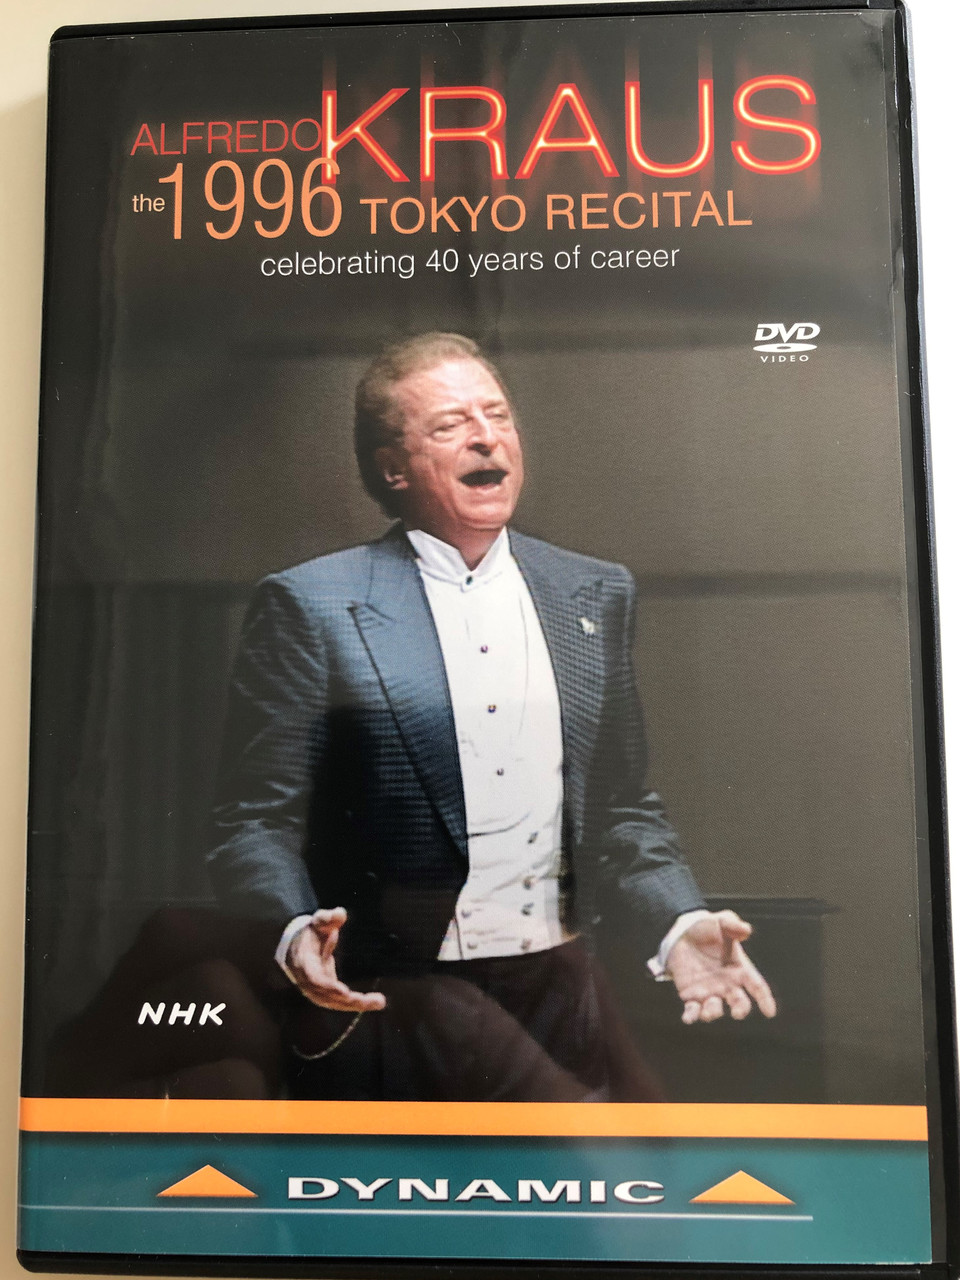 Afredo Kraus - The 1996 Tokyo Recital DVD 2010 / Celebrating 40 years of  career / Recorded at Tokyo Bunkamura Orchard Hall 1996 / Alfredo Kraus  tenor, Emiko Suga soprano, Edelmiro Arnaltes piano, Asier Polo cello -  bibleinmylanguage